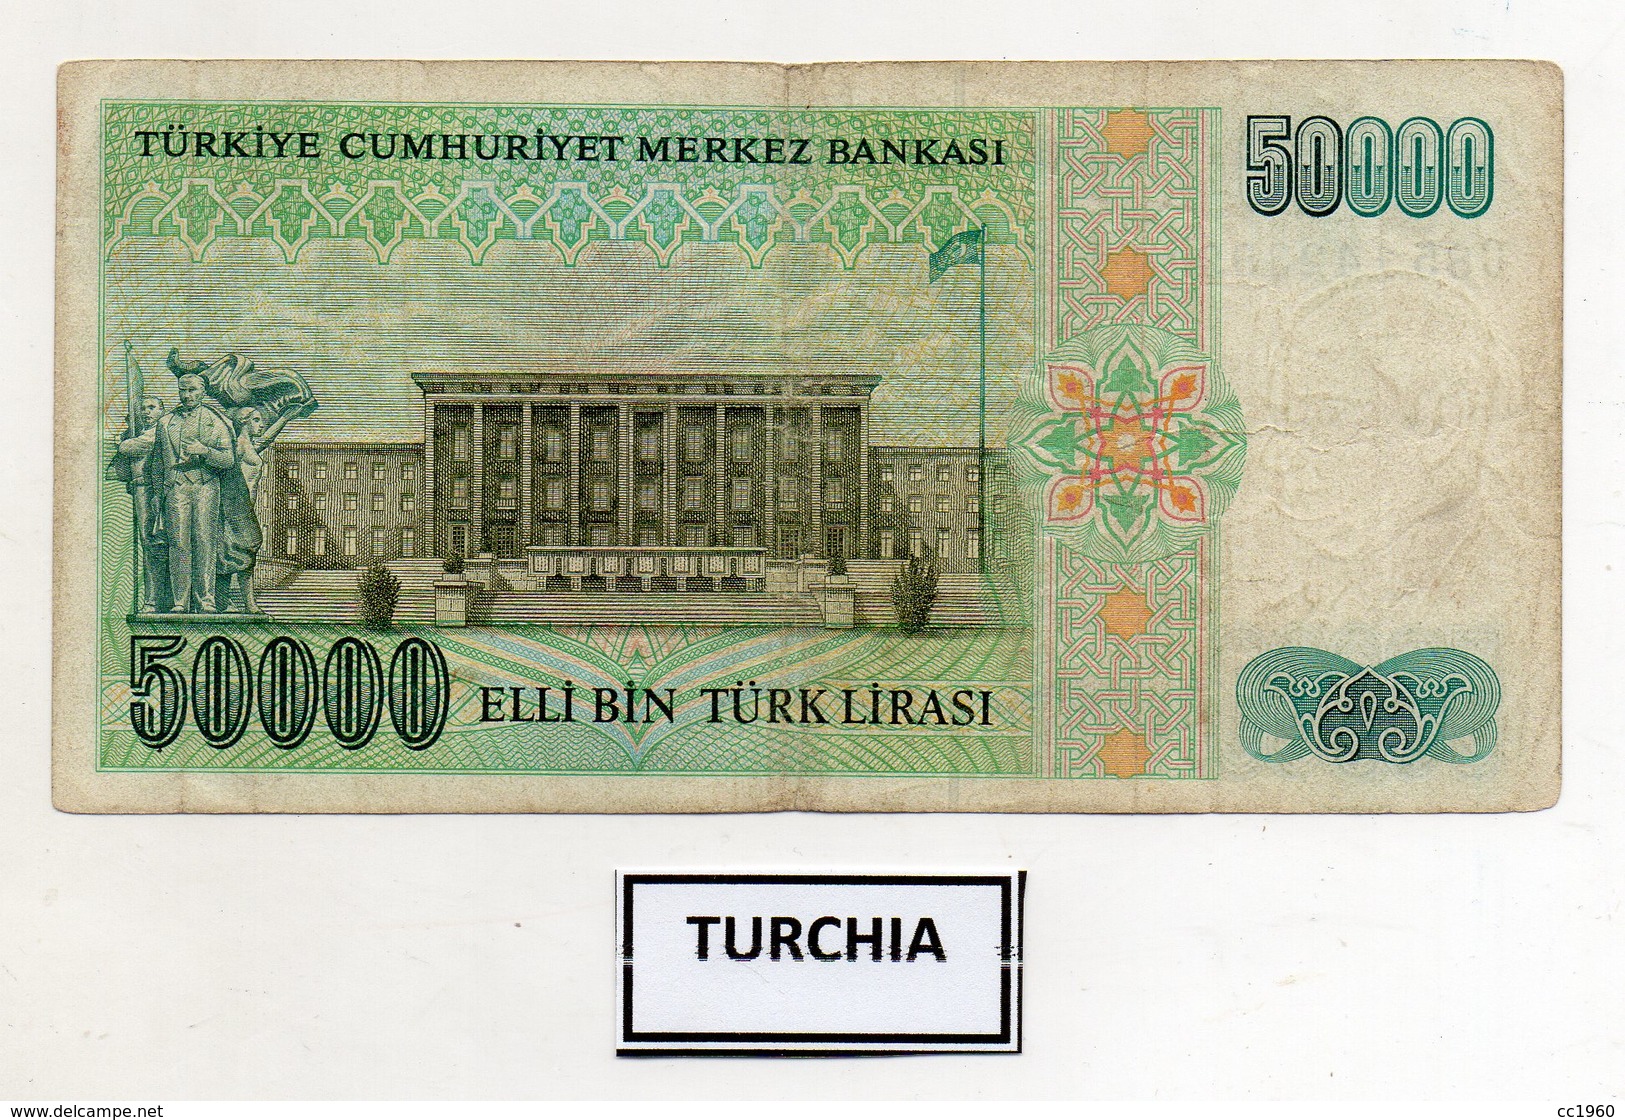 Turchia - 1970 - Banconota Da 50.000 Lire Turche - Usata -  (FDC9826) - Turquia